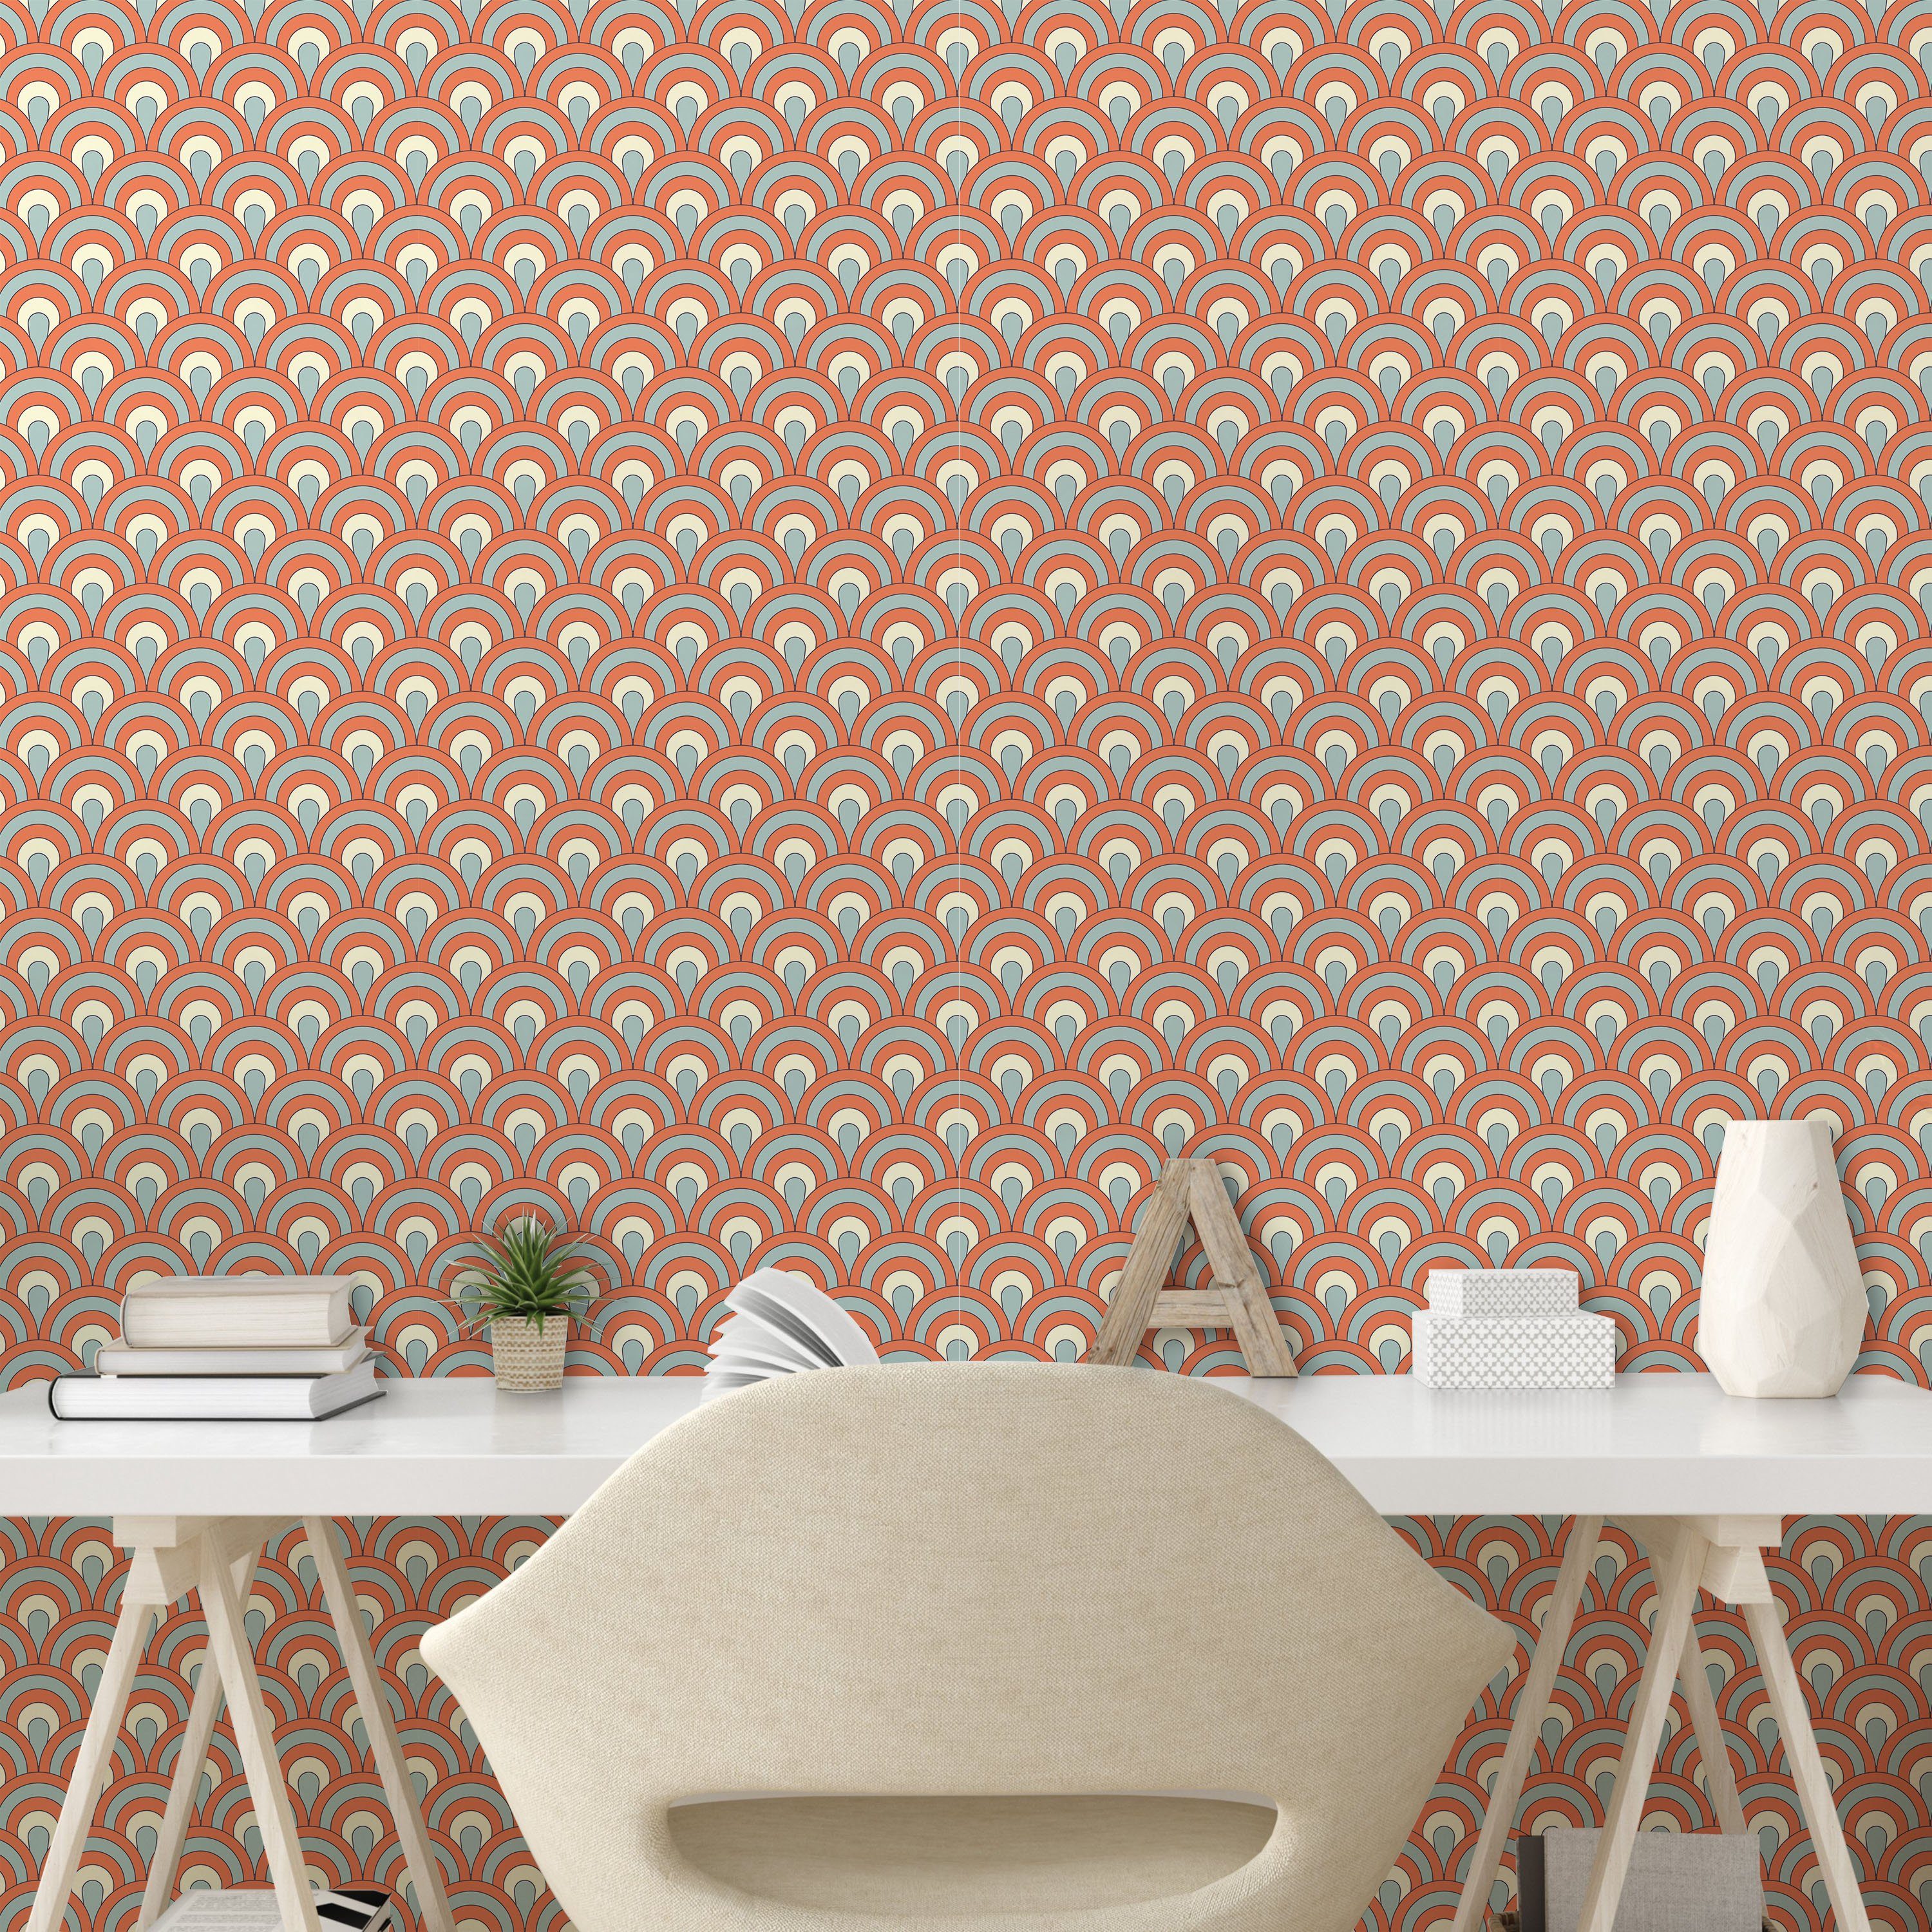 Abakuhaus Vinyltapete selbstklebendes Wohnzimmer Kurvige Küchenakzent, Orange Waves Overlapping